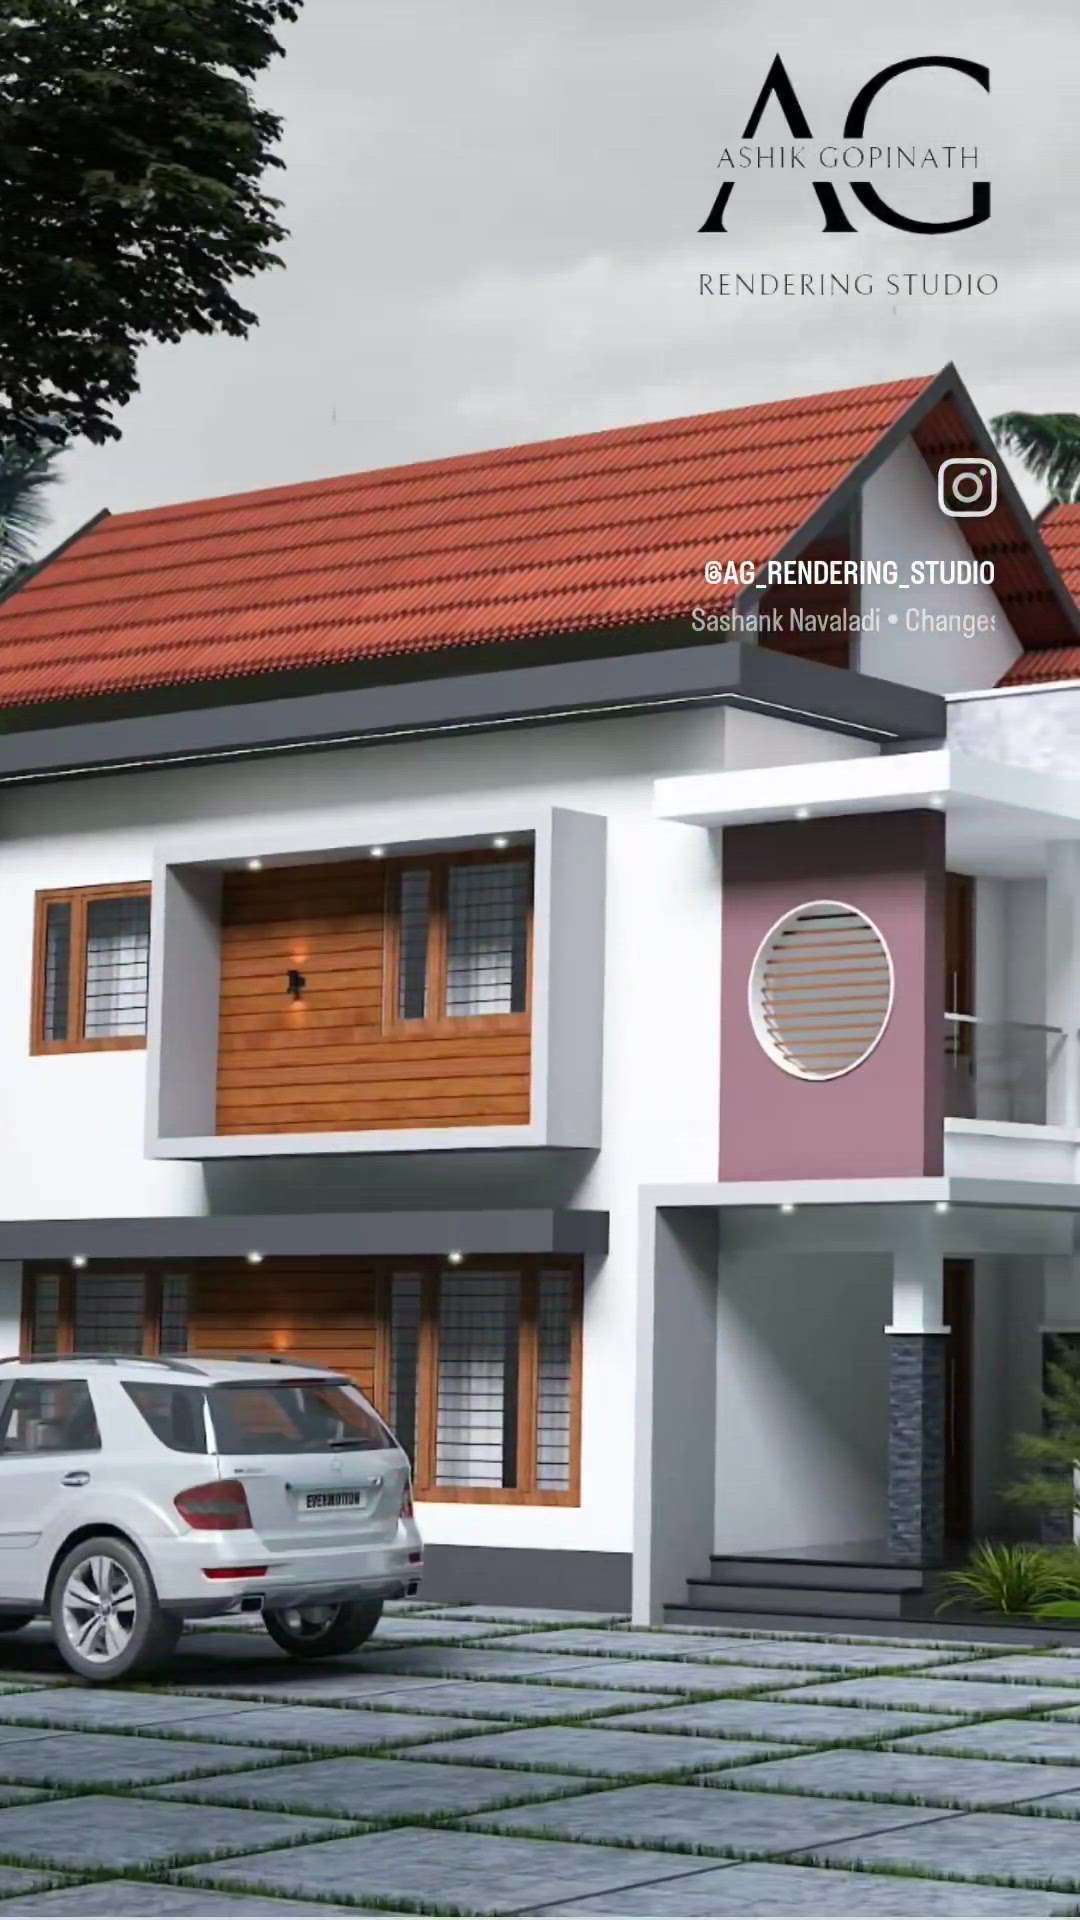 Proposed Design @Thrissur
.
.
.
.
.
.
#kolodesign #KeralaStyleHouse #keralahomestyle #keralahomedesignz #keralastyle #keralahousedesigns #keralaelevation #keralaarchitectures #vanithaveeduofficial #veed #veedupani #HouseDesigns #ElevationHome #keraladesigns